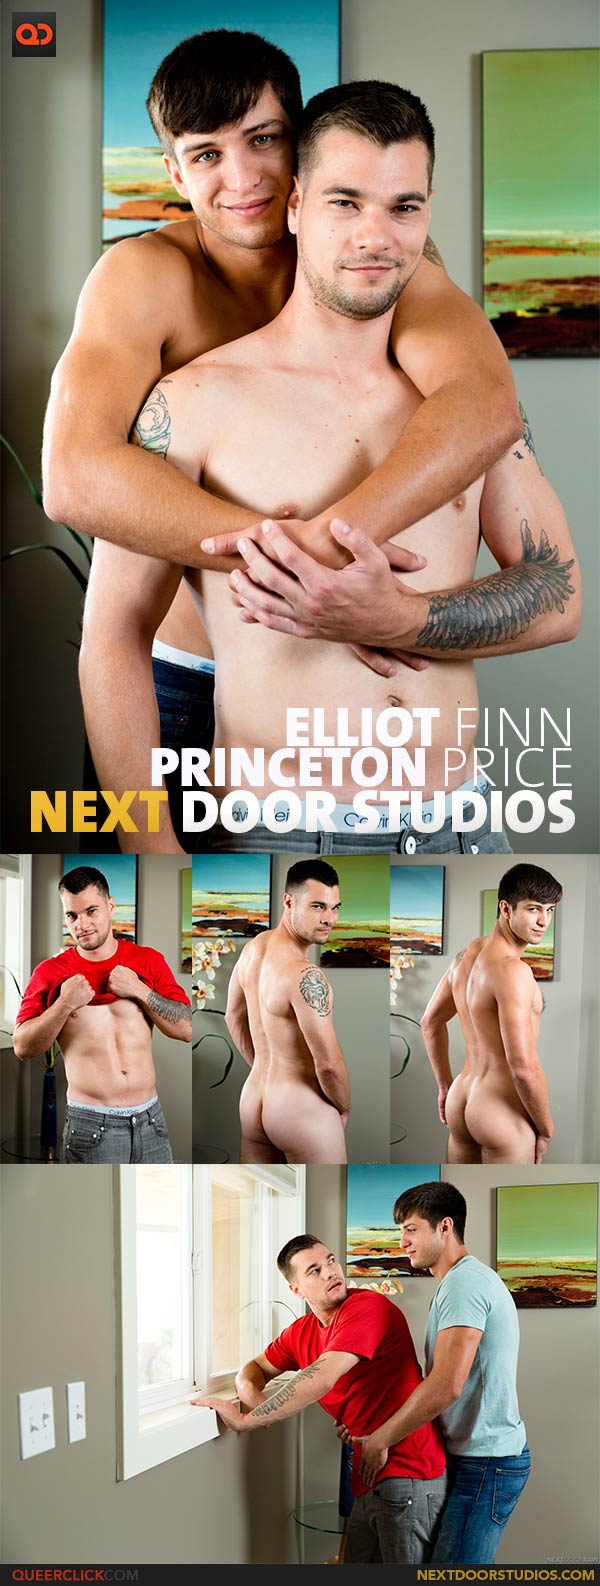 Next Door Studios:  Princeton Price and Elliot Finn